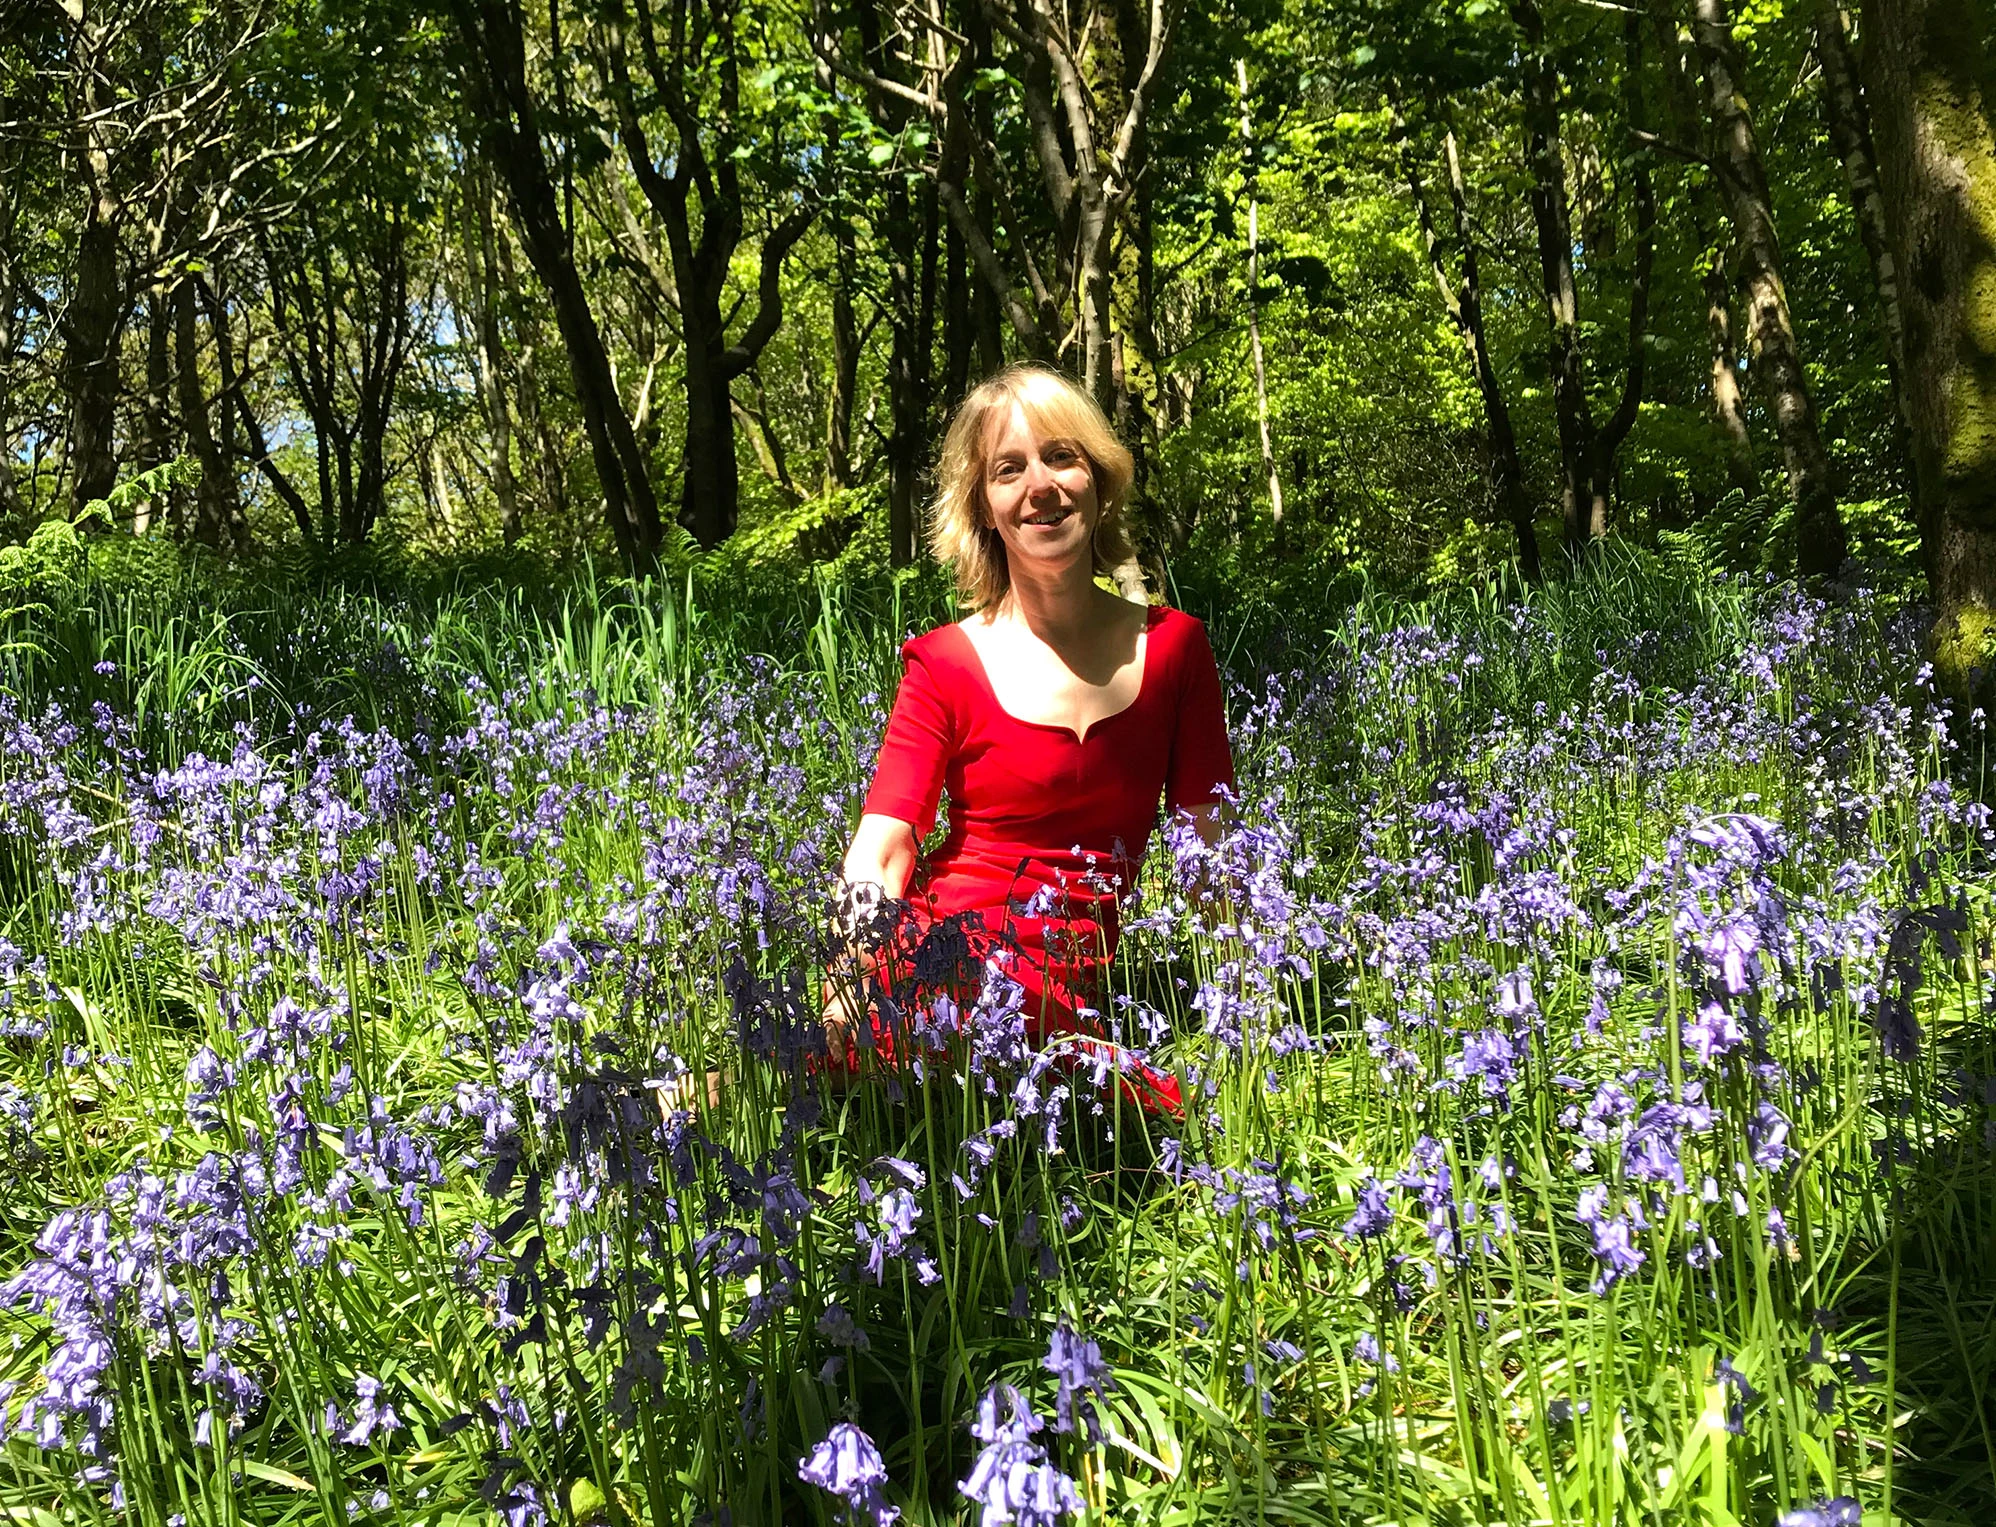 Sally Fielding among the bluebells at Muncaster Castle gardens